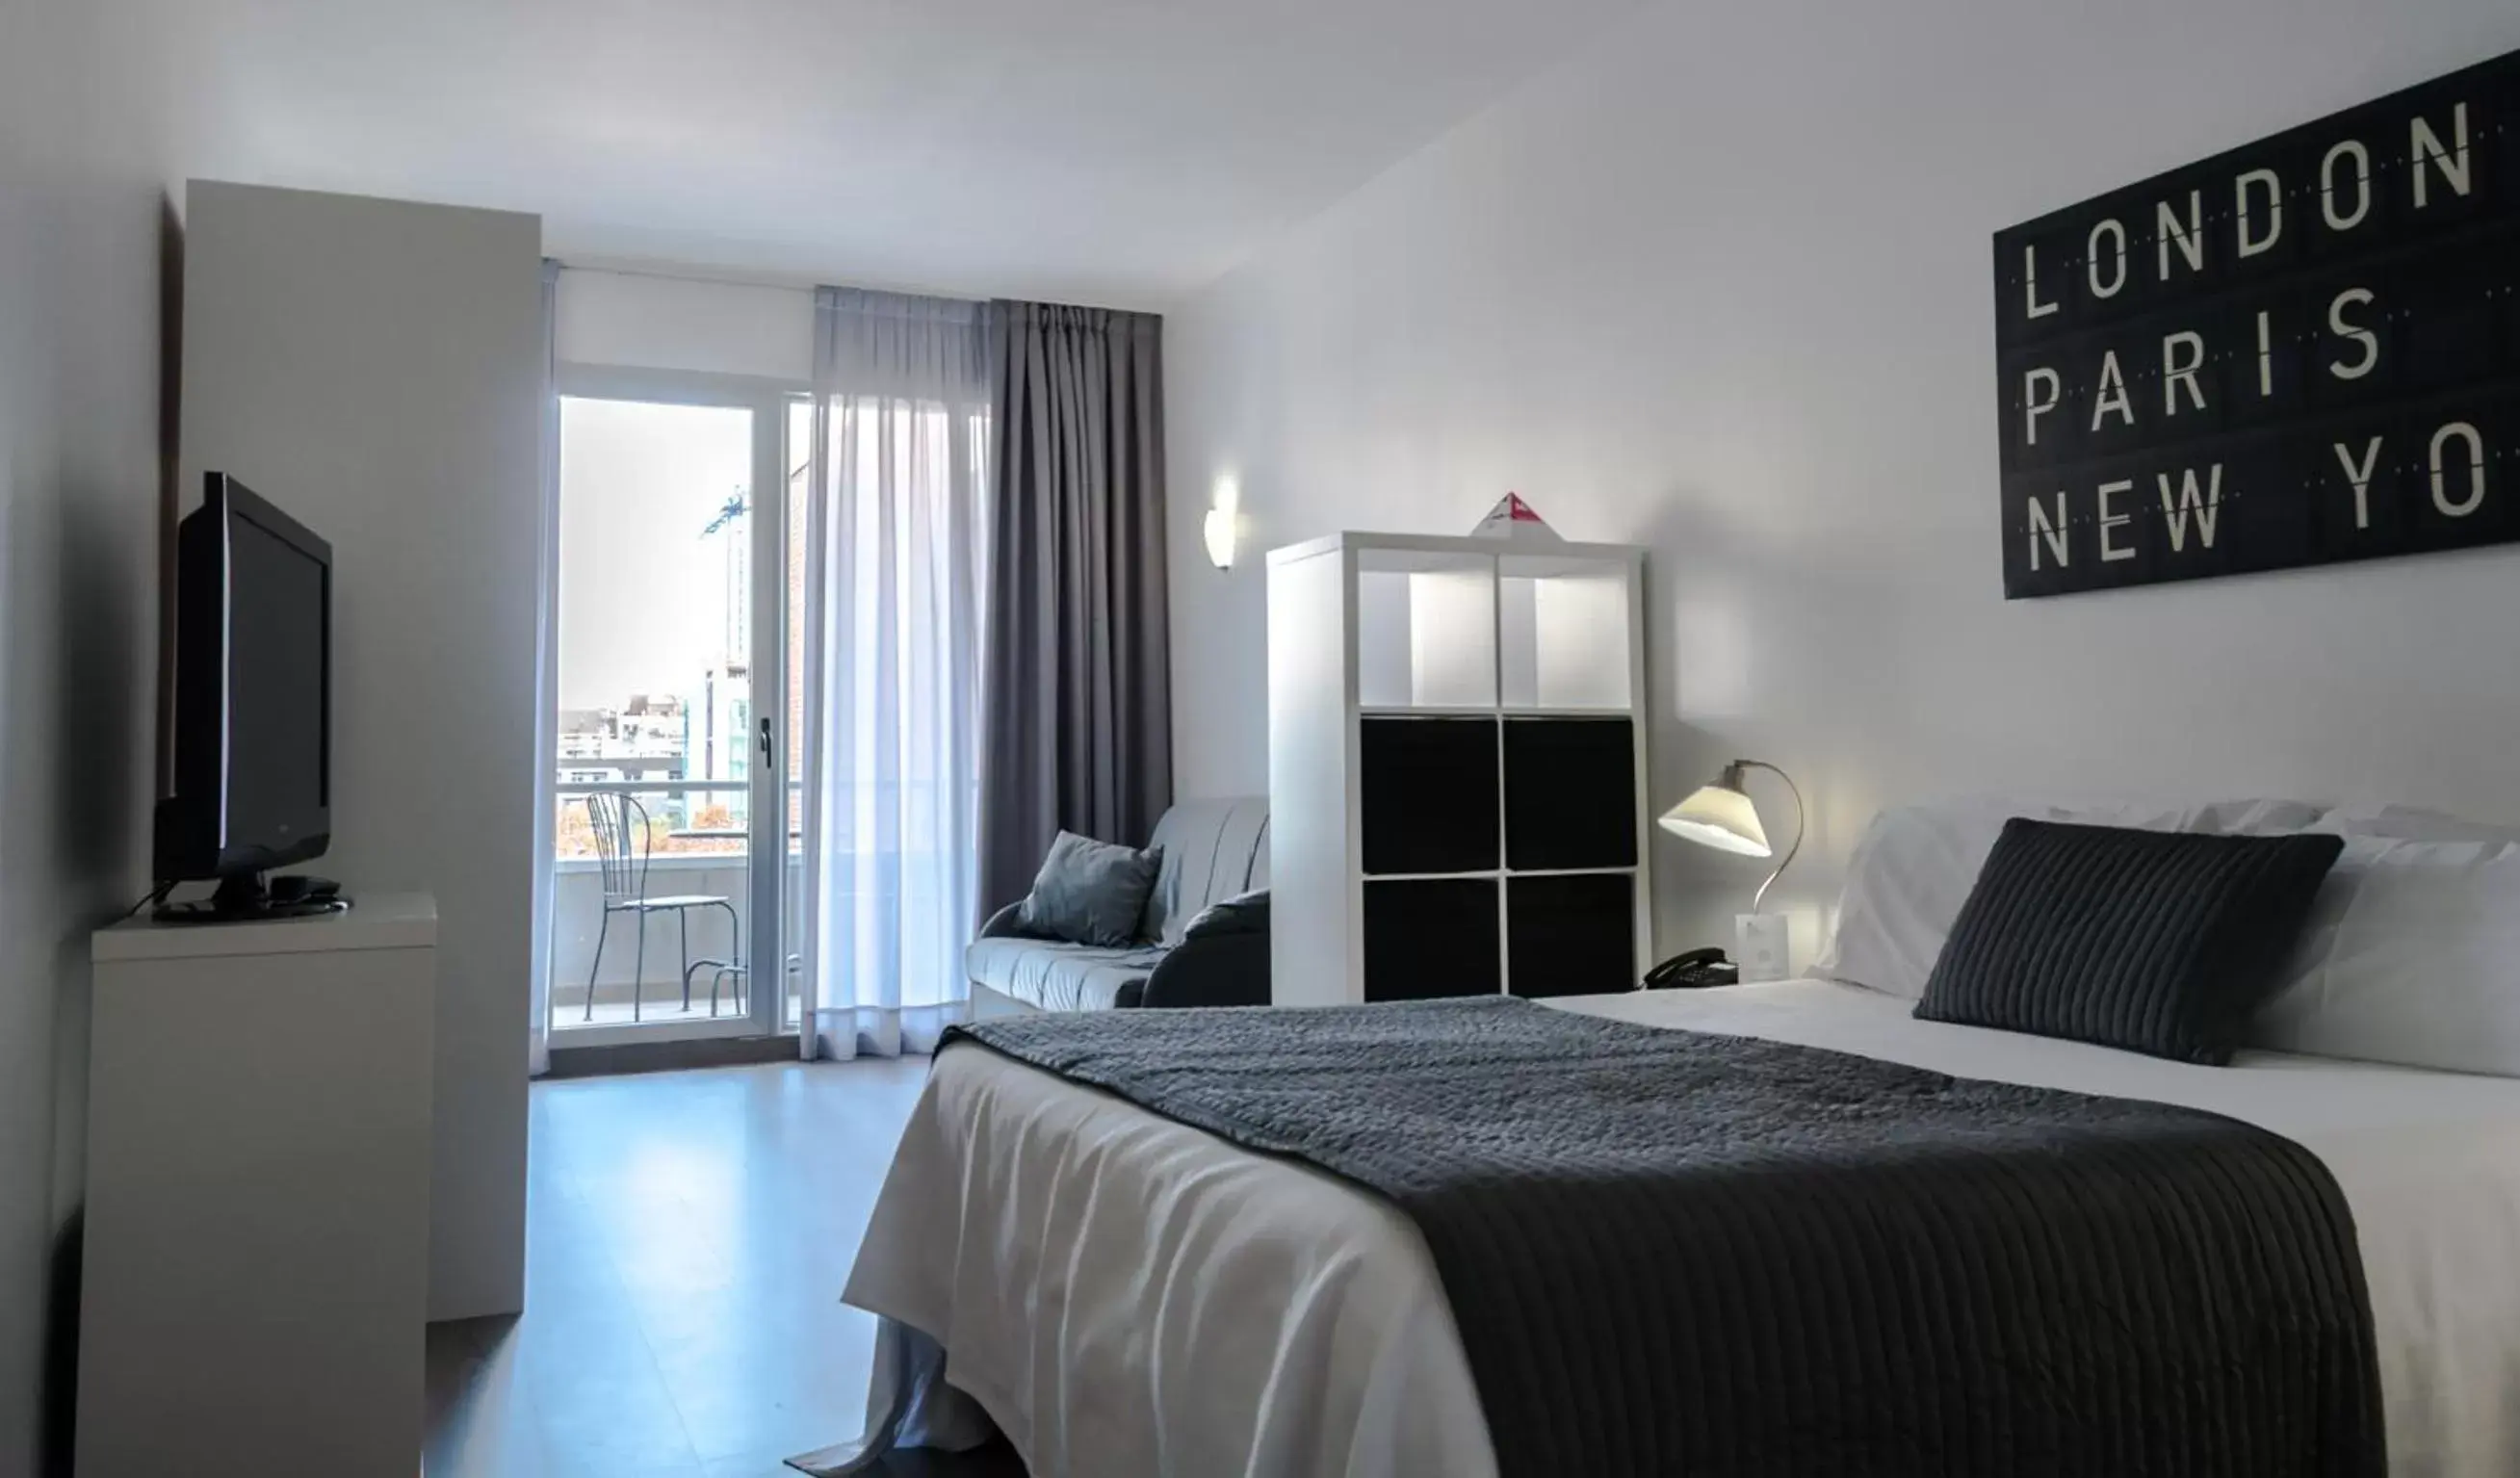 Bedroom, Room Photo in Aparthotel Atenea Calabria